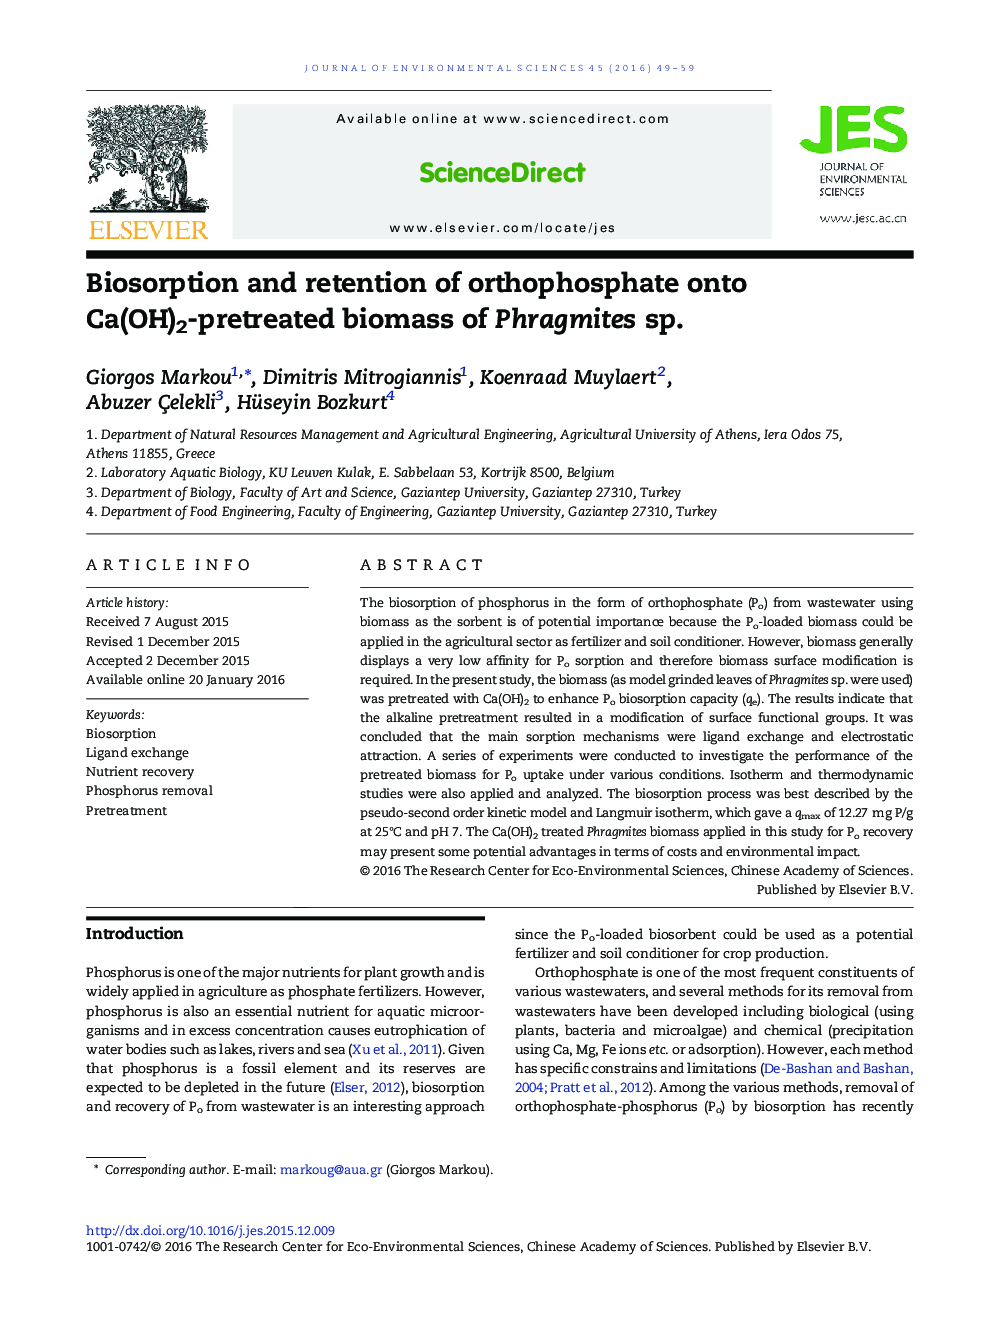 Biosorption and retention of orthophosphate onto Ca(OH)2-pretreated biomass of Phragmites sp.